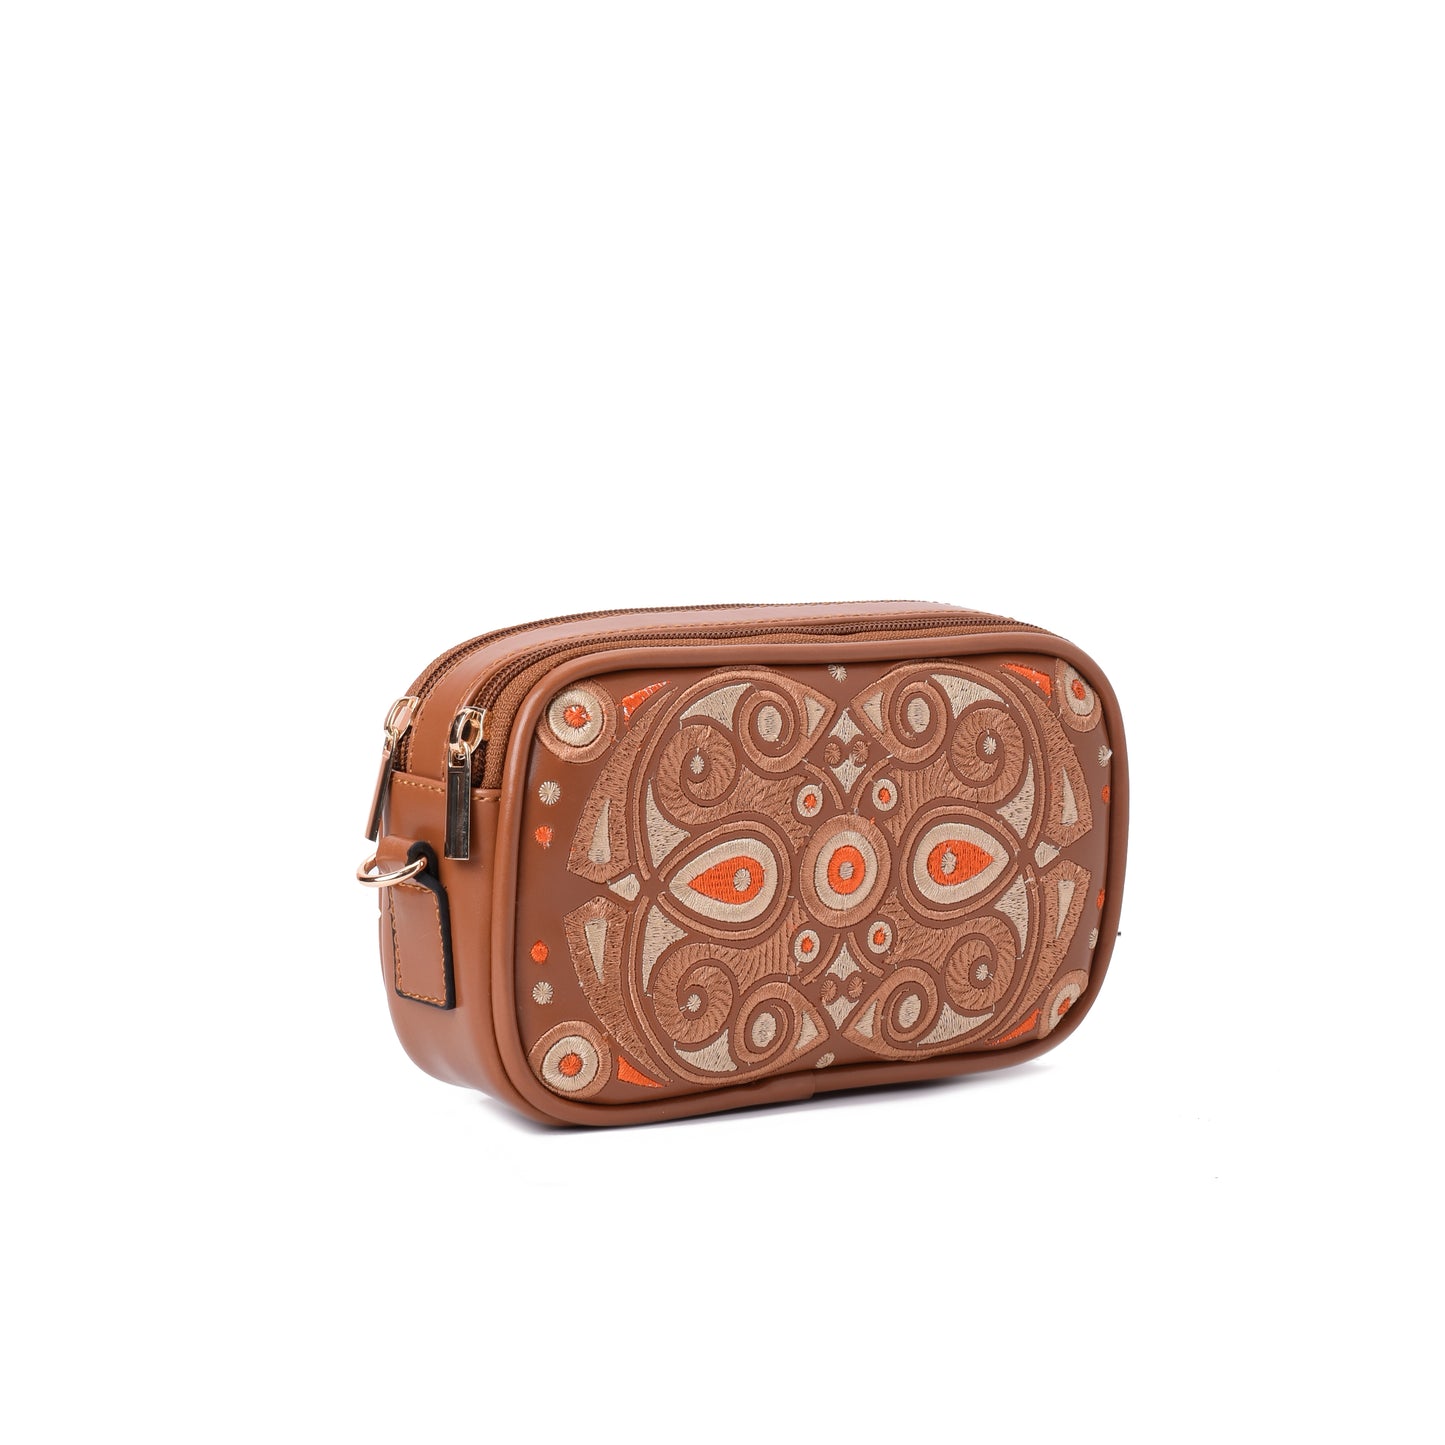 Burst Brown Handbag - Code 944